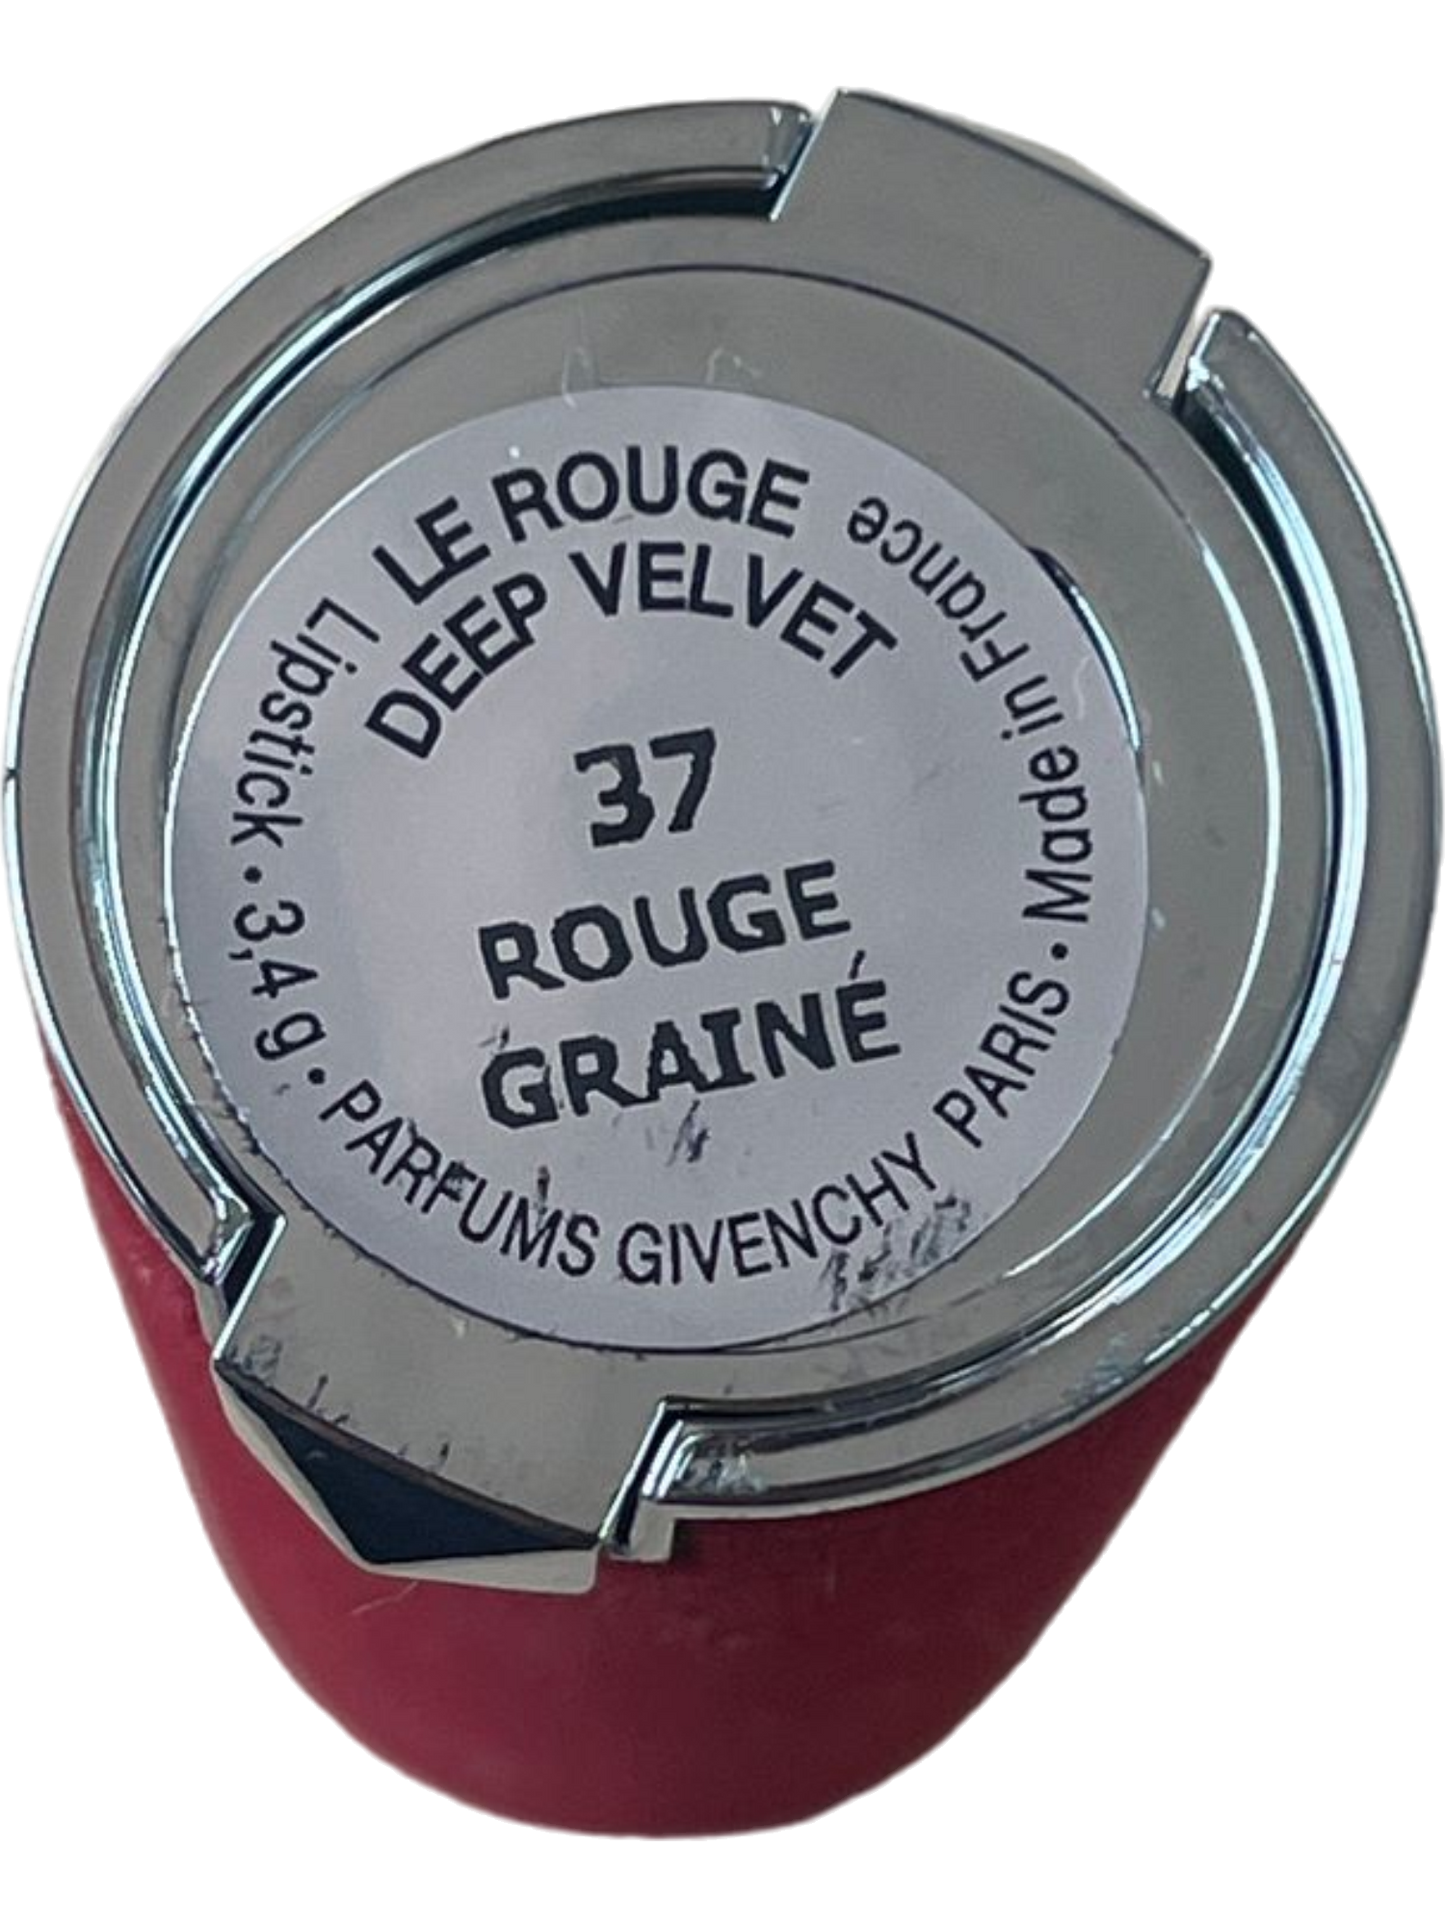 Givenchy Red Le Rouge Deep Velvet Lipstick Rouge Graine